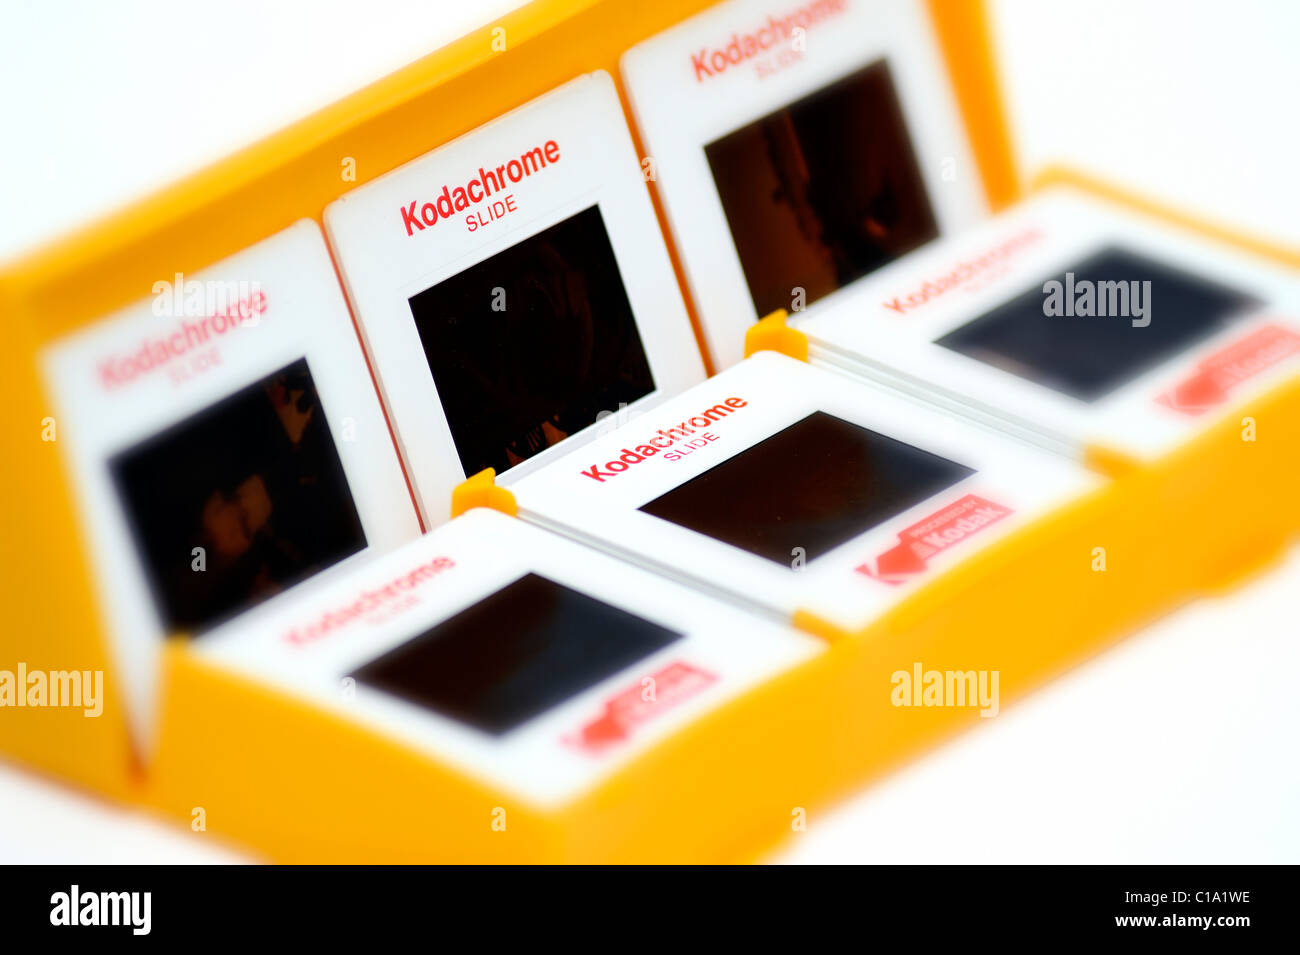 Kodachrome 64 slide film Eastman Kodak company Stock Photo